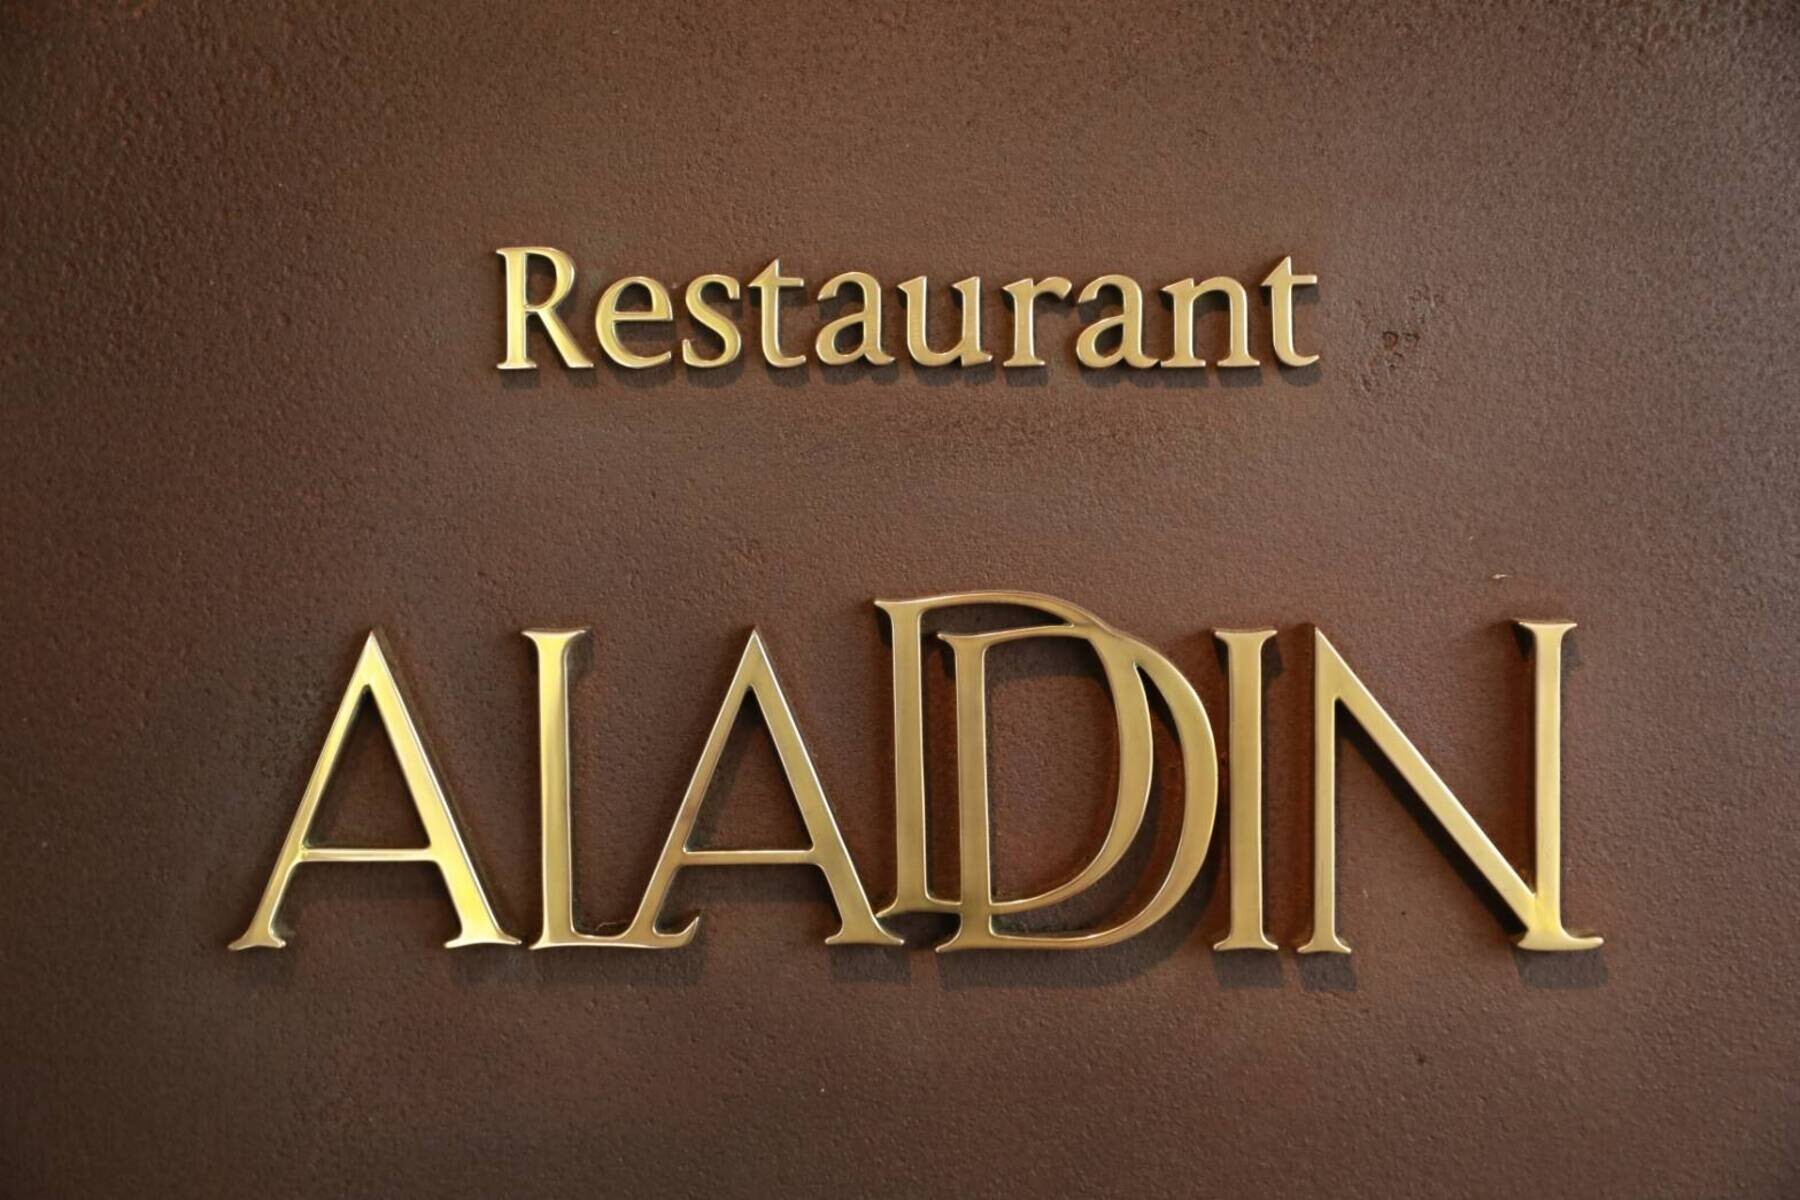 Restaurant ALADDIN's image 1